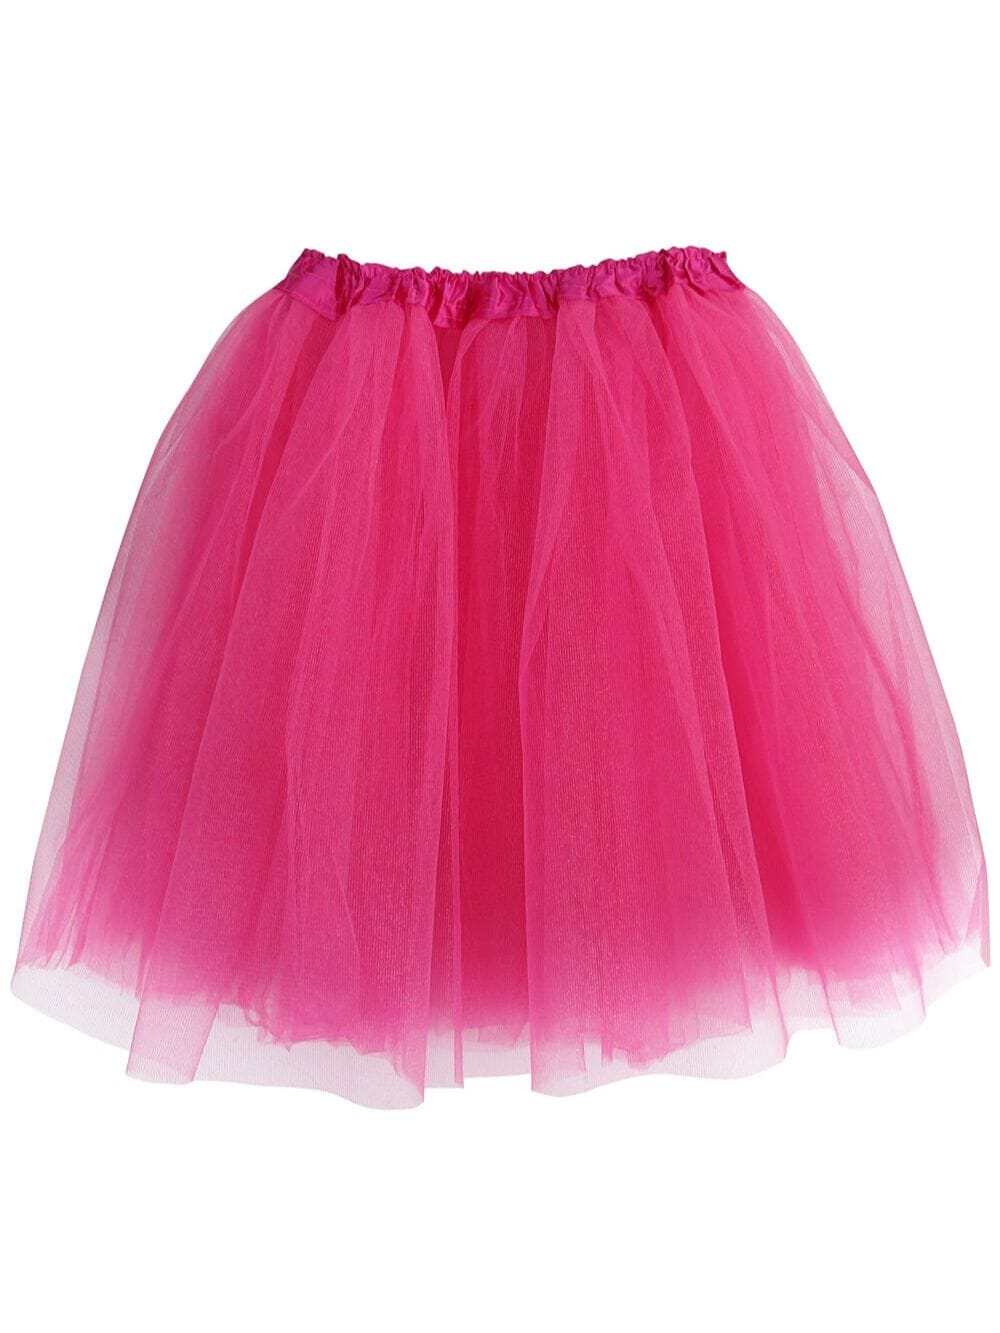 Hot Pink Plus Size Adult Tutu Skirt - Women's Plus Size 3- Layer Basic Ballet Costume Dance Tutus - Sydney So Sweet